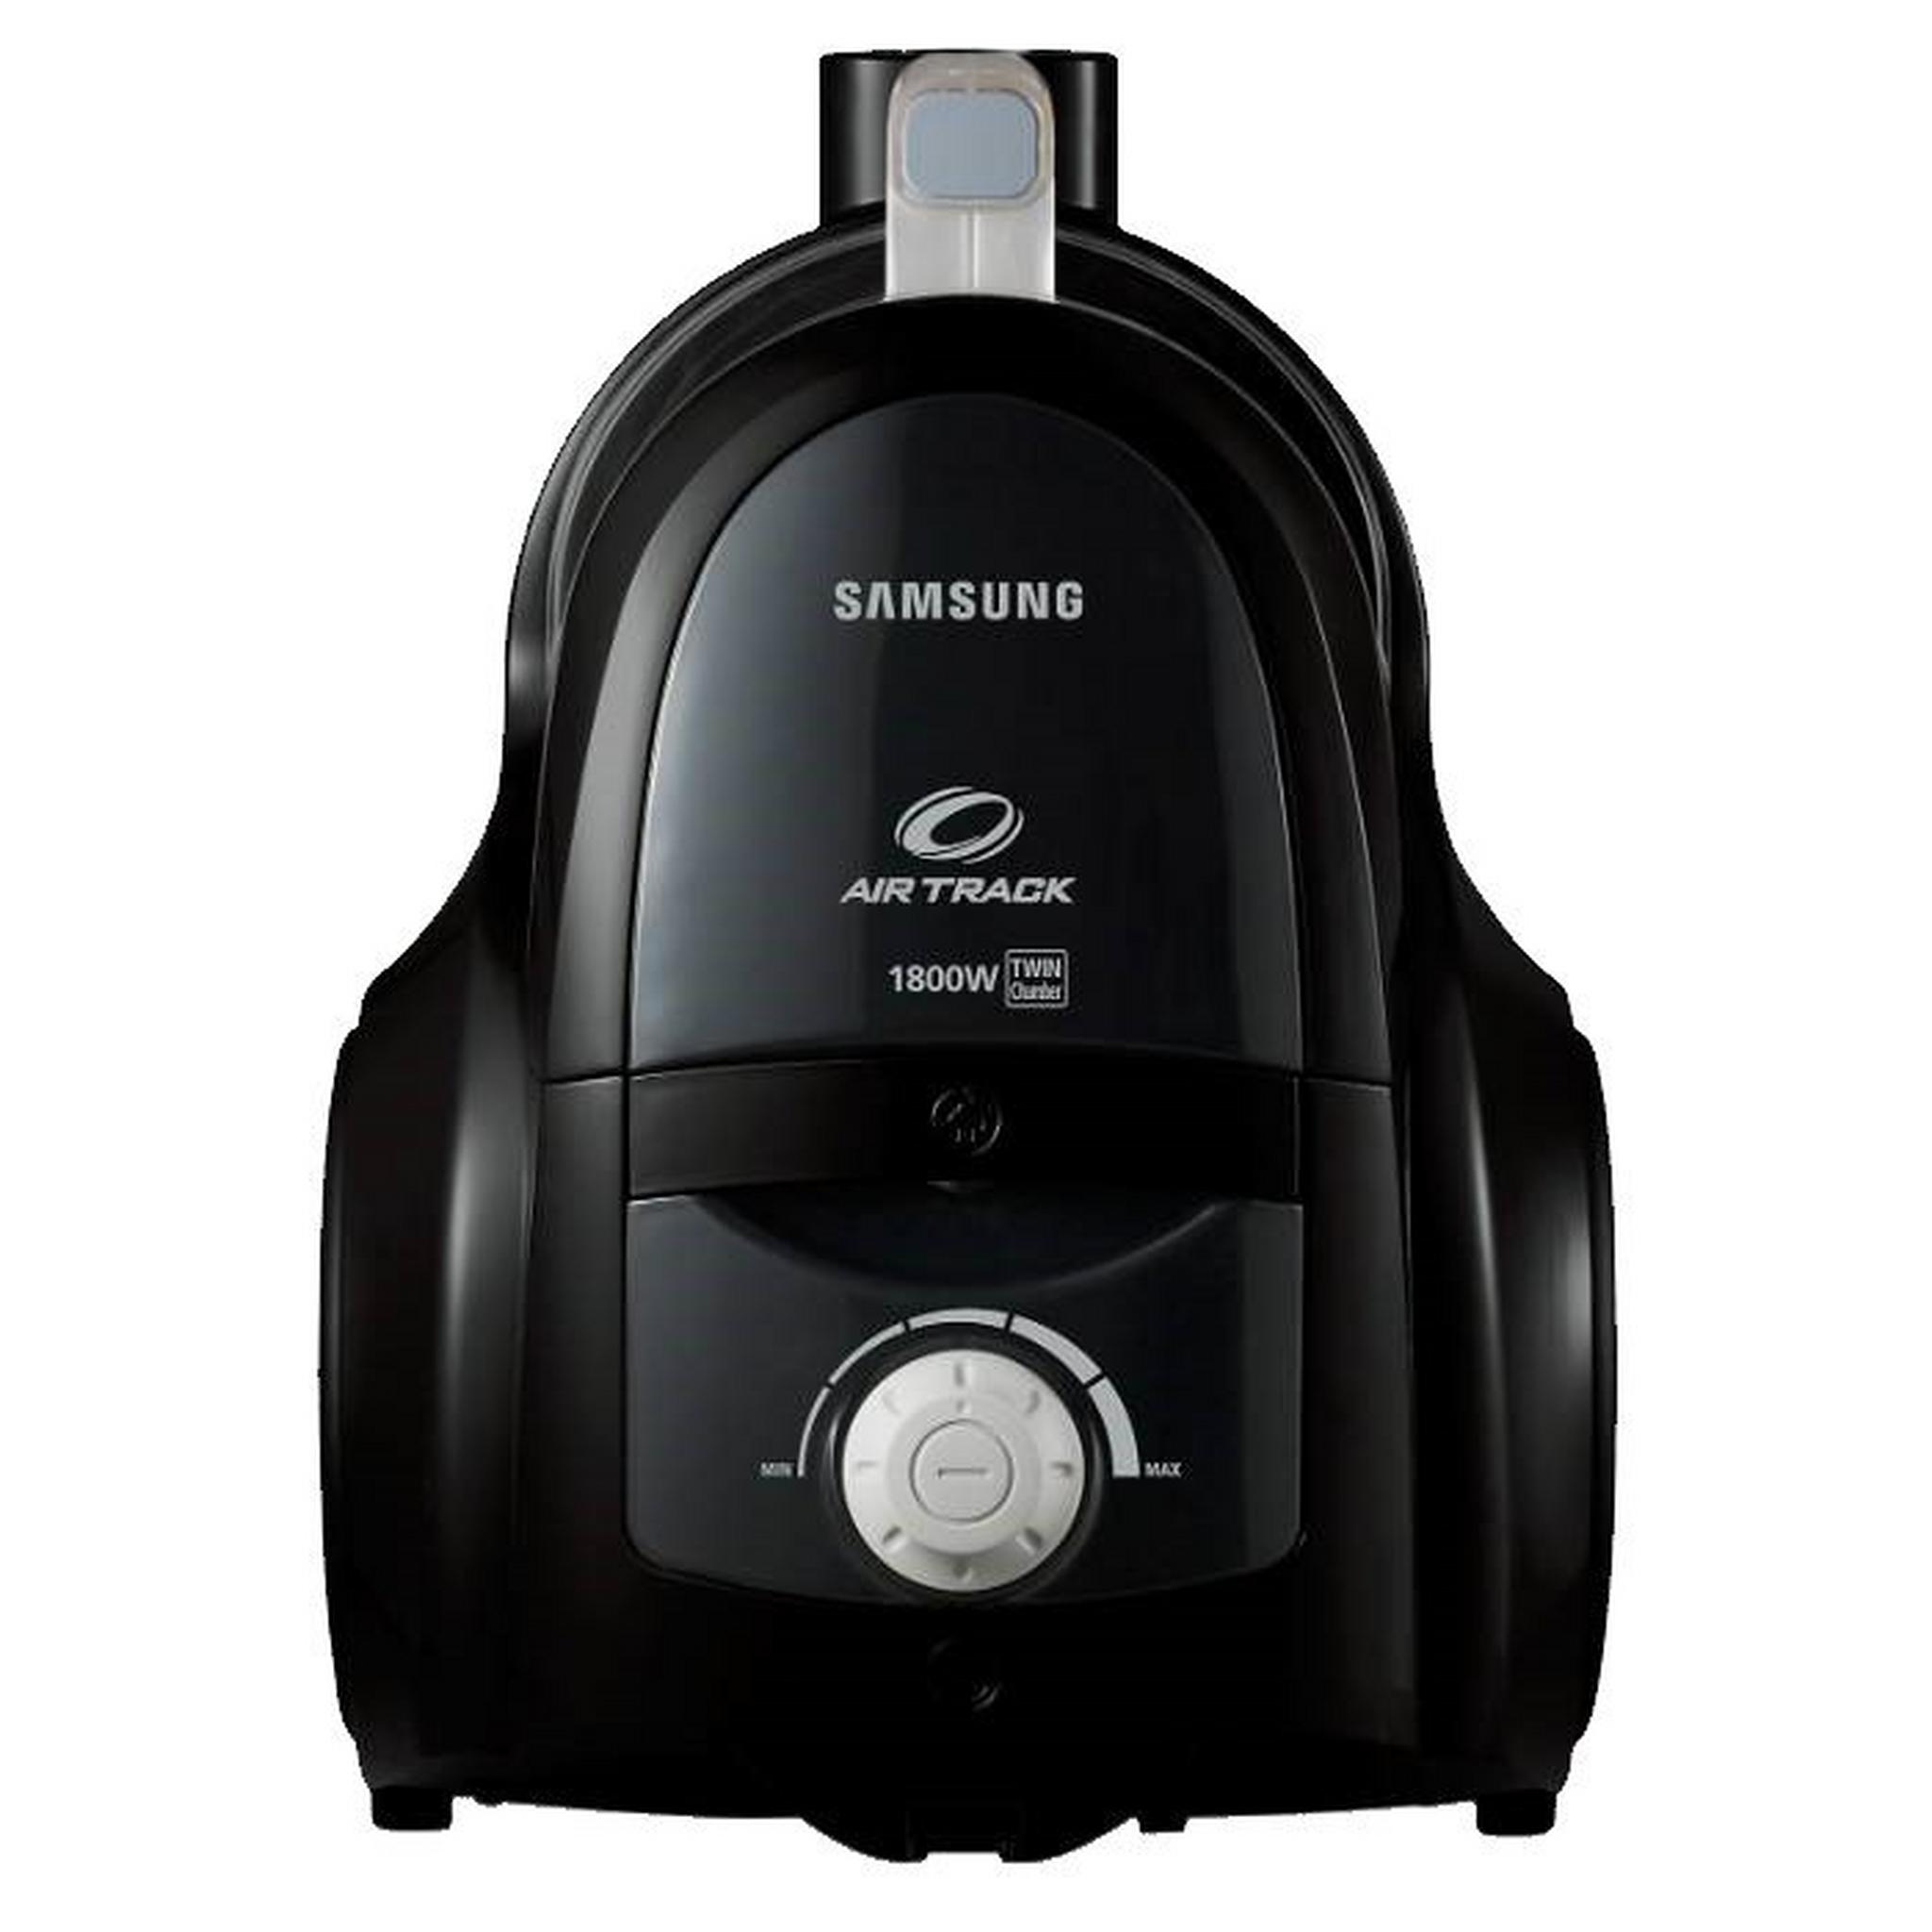 Samsung Bagless Vacuum Cleaner, 2000W, 1.3Liters, VCC4570S4K - Black